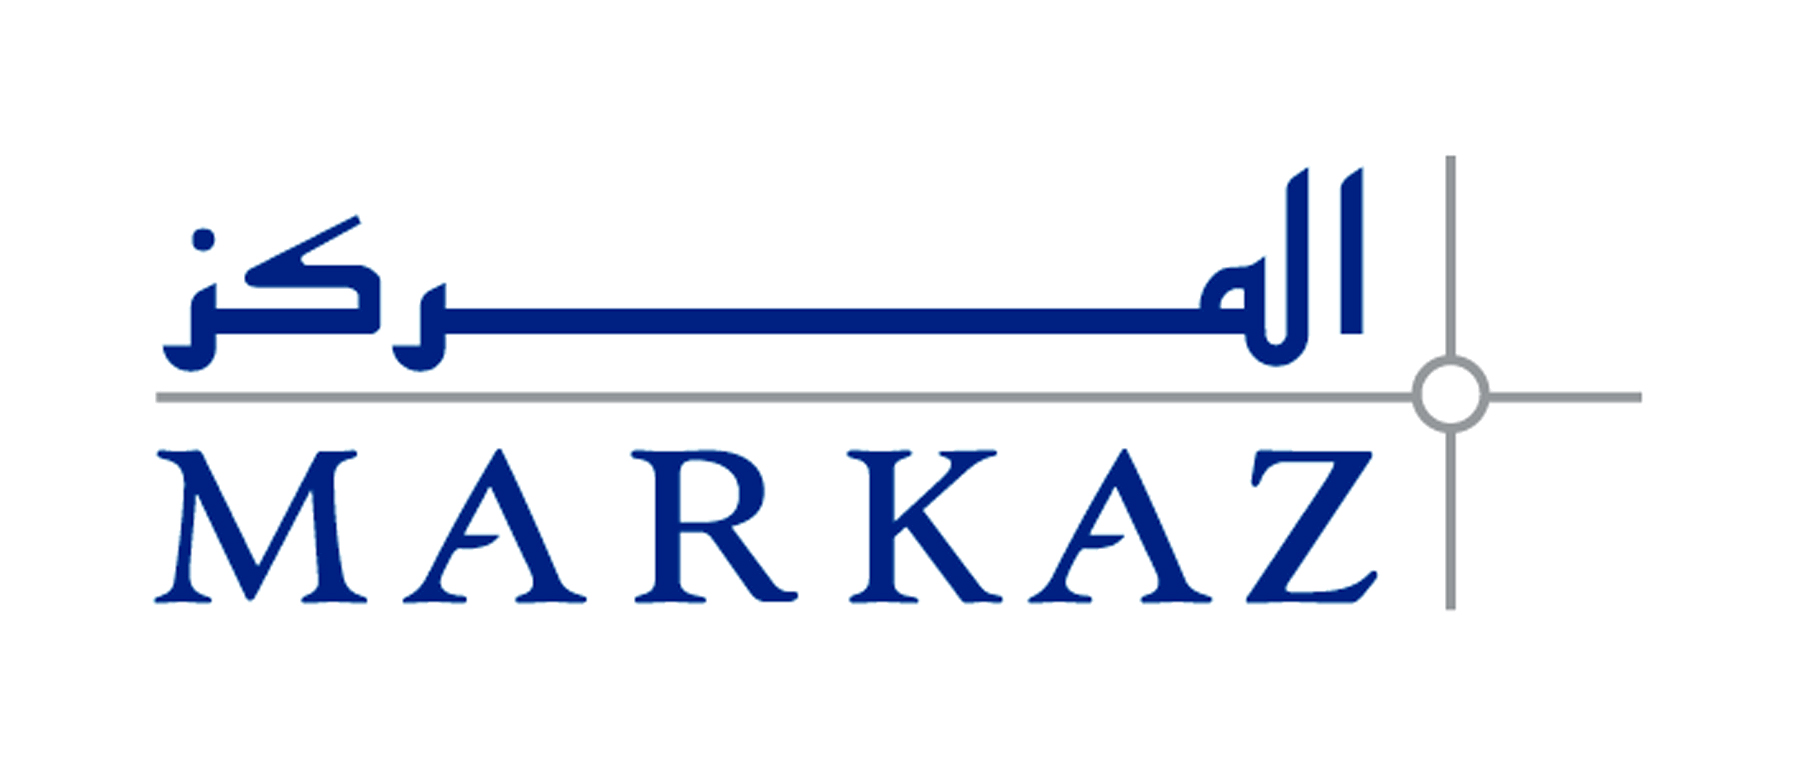 Kuwait Financial Centre "Markaz"